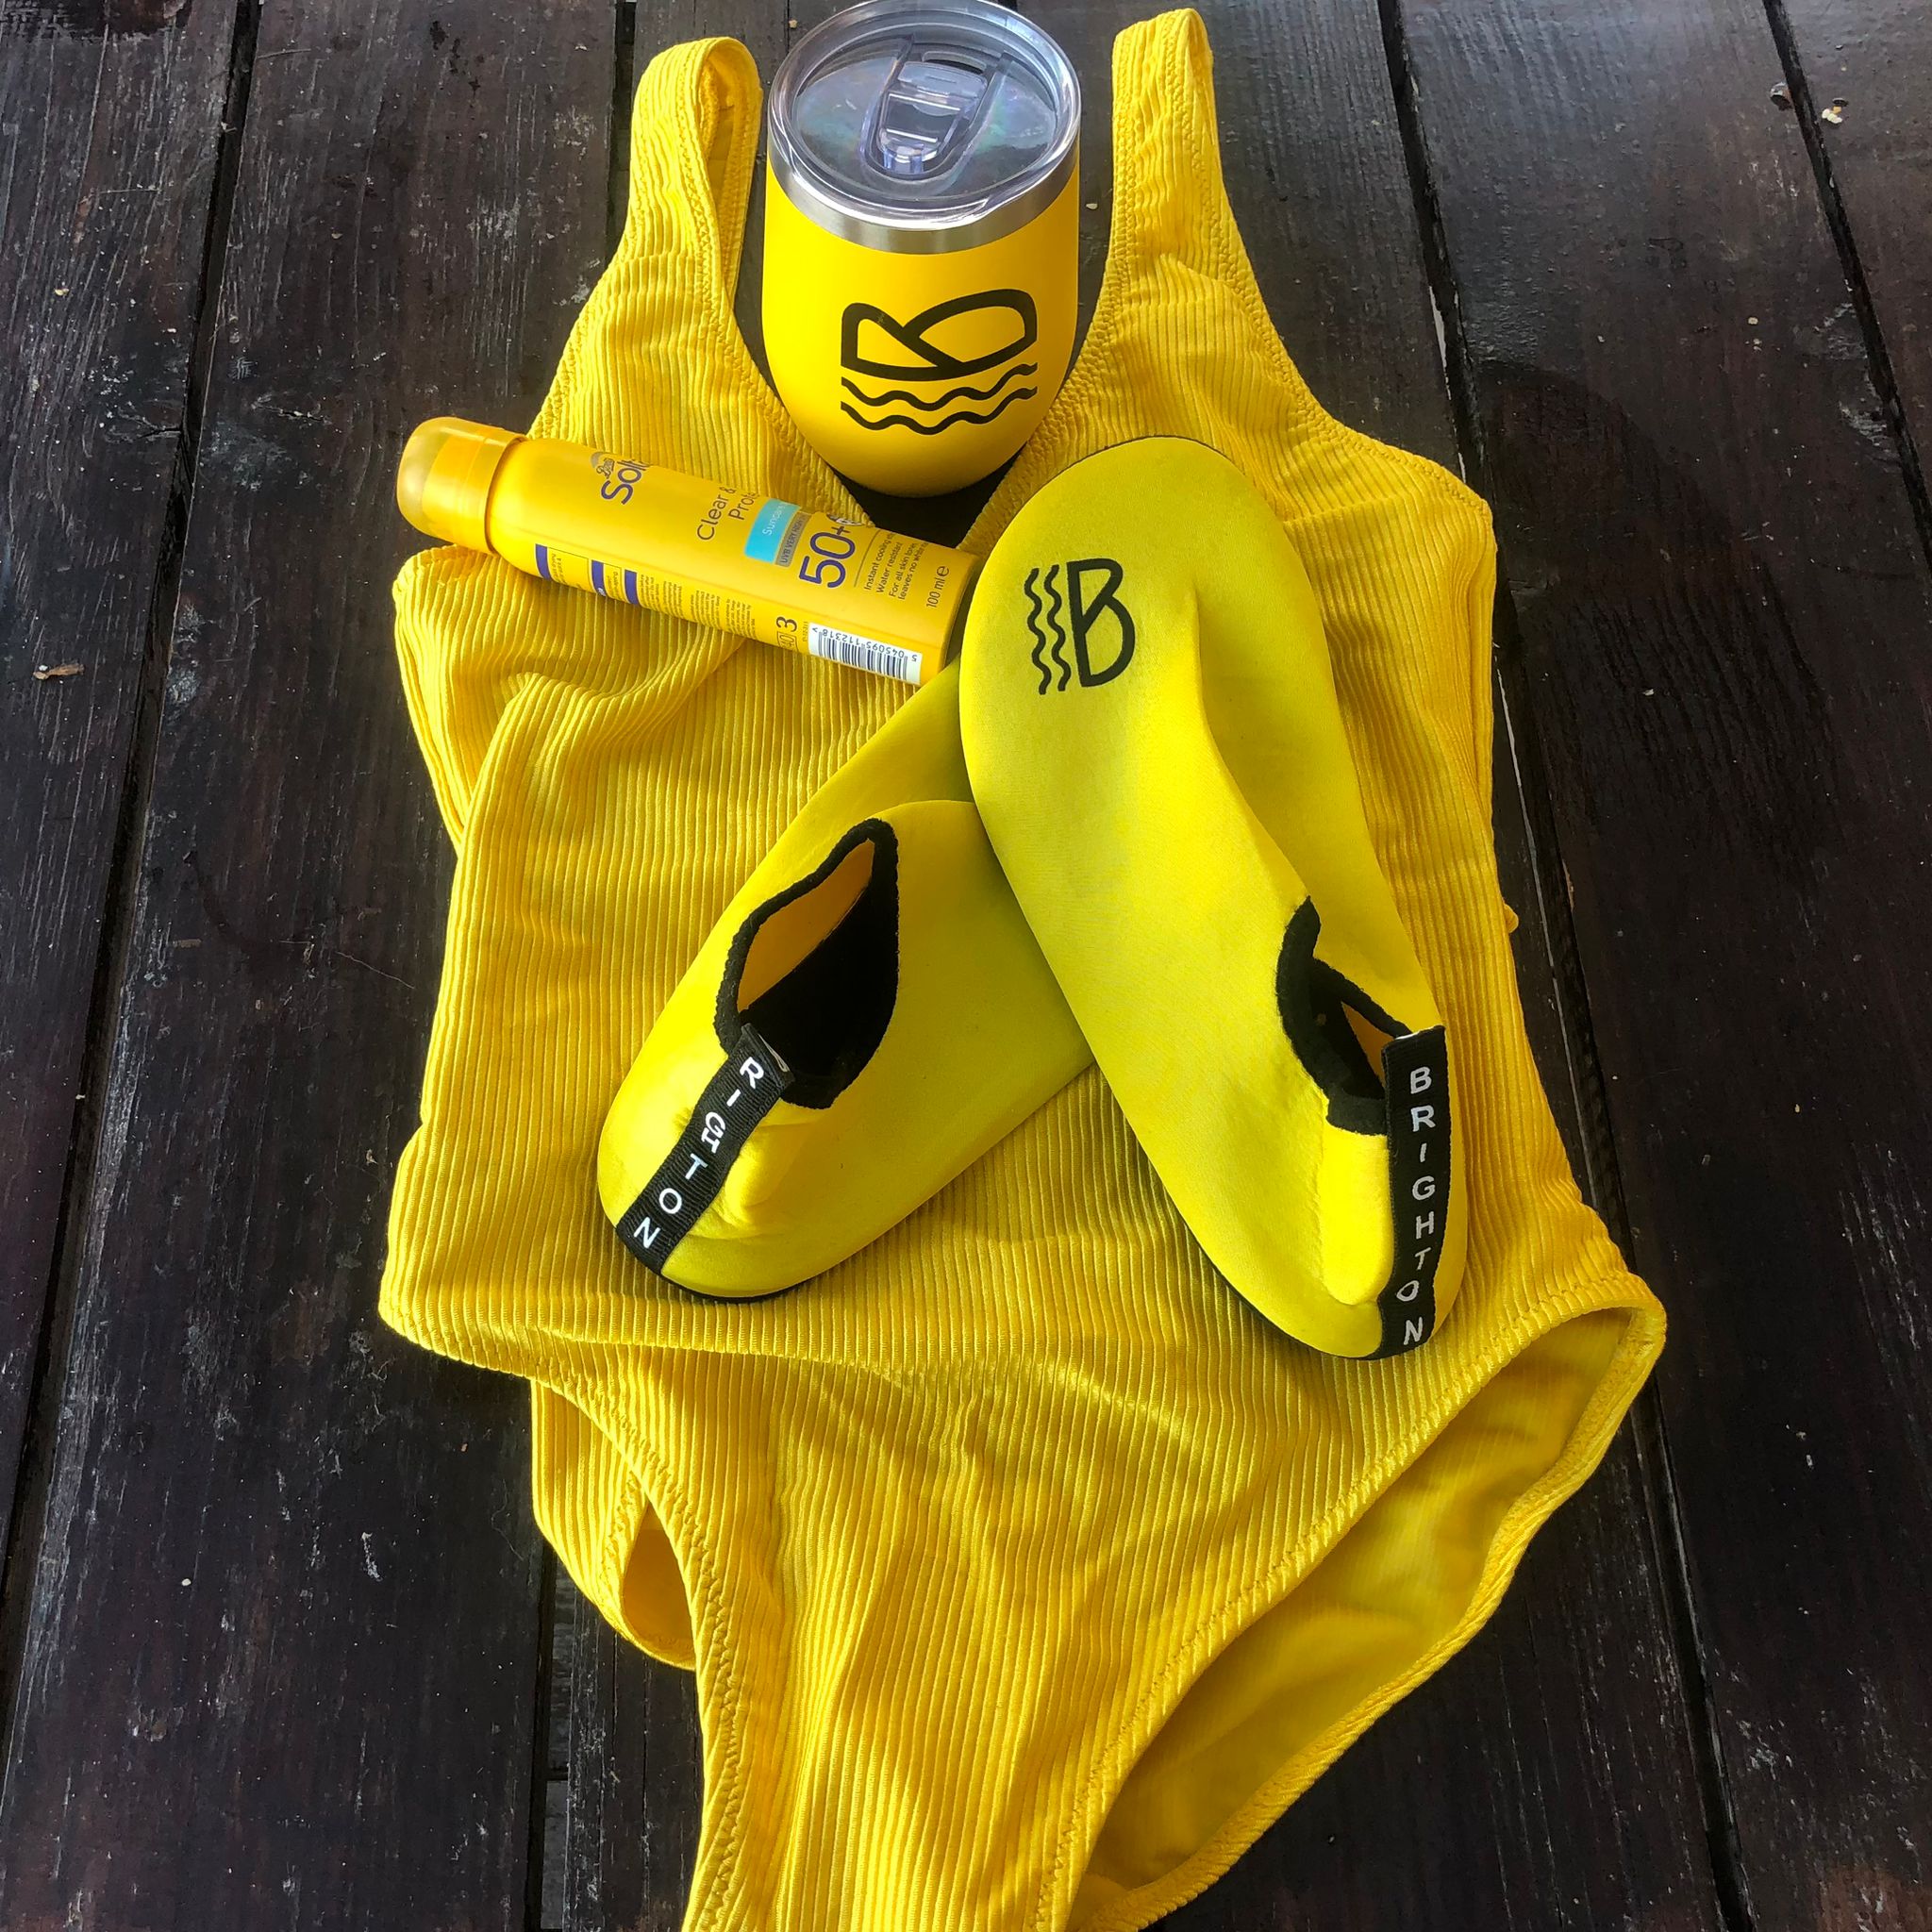 Sunburst Yellow Stainless Steel Beach Cup